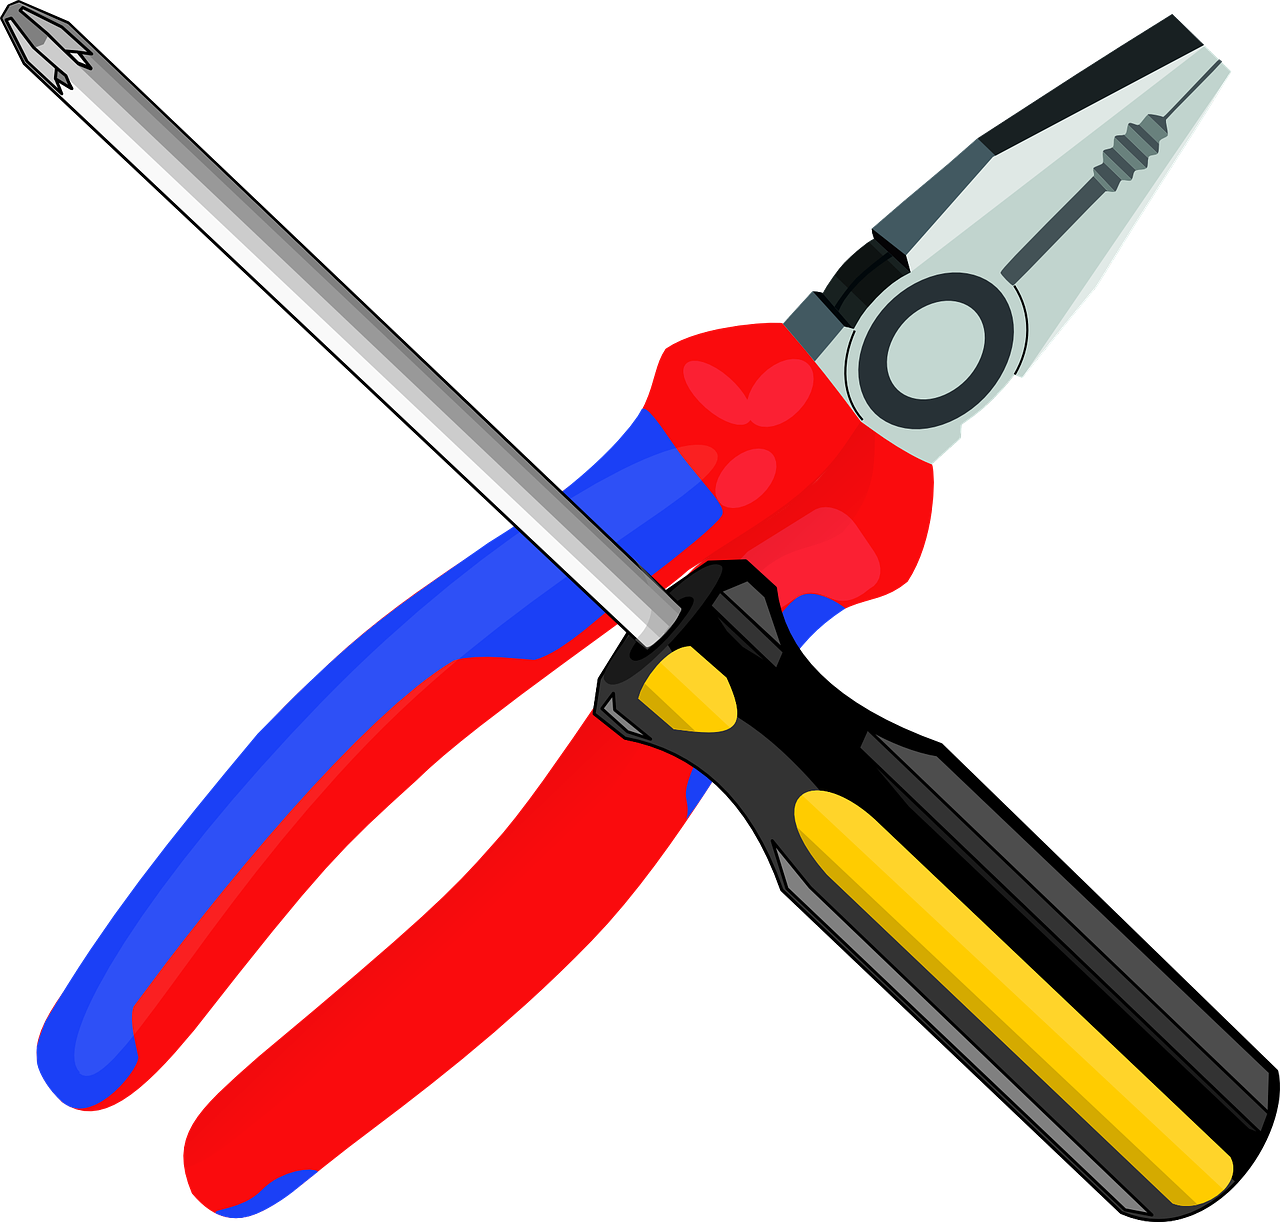 tool pliers screwdriver free photo